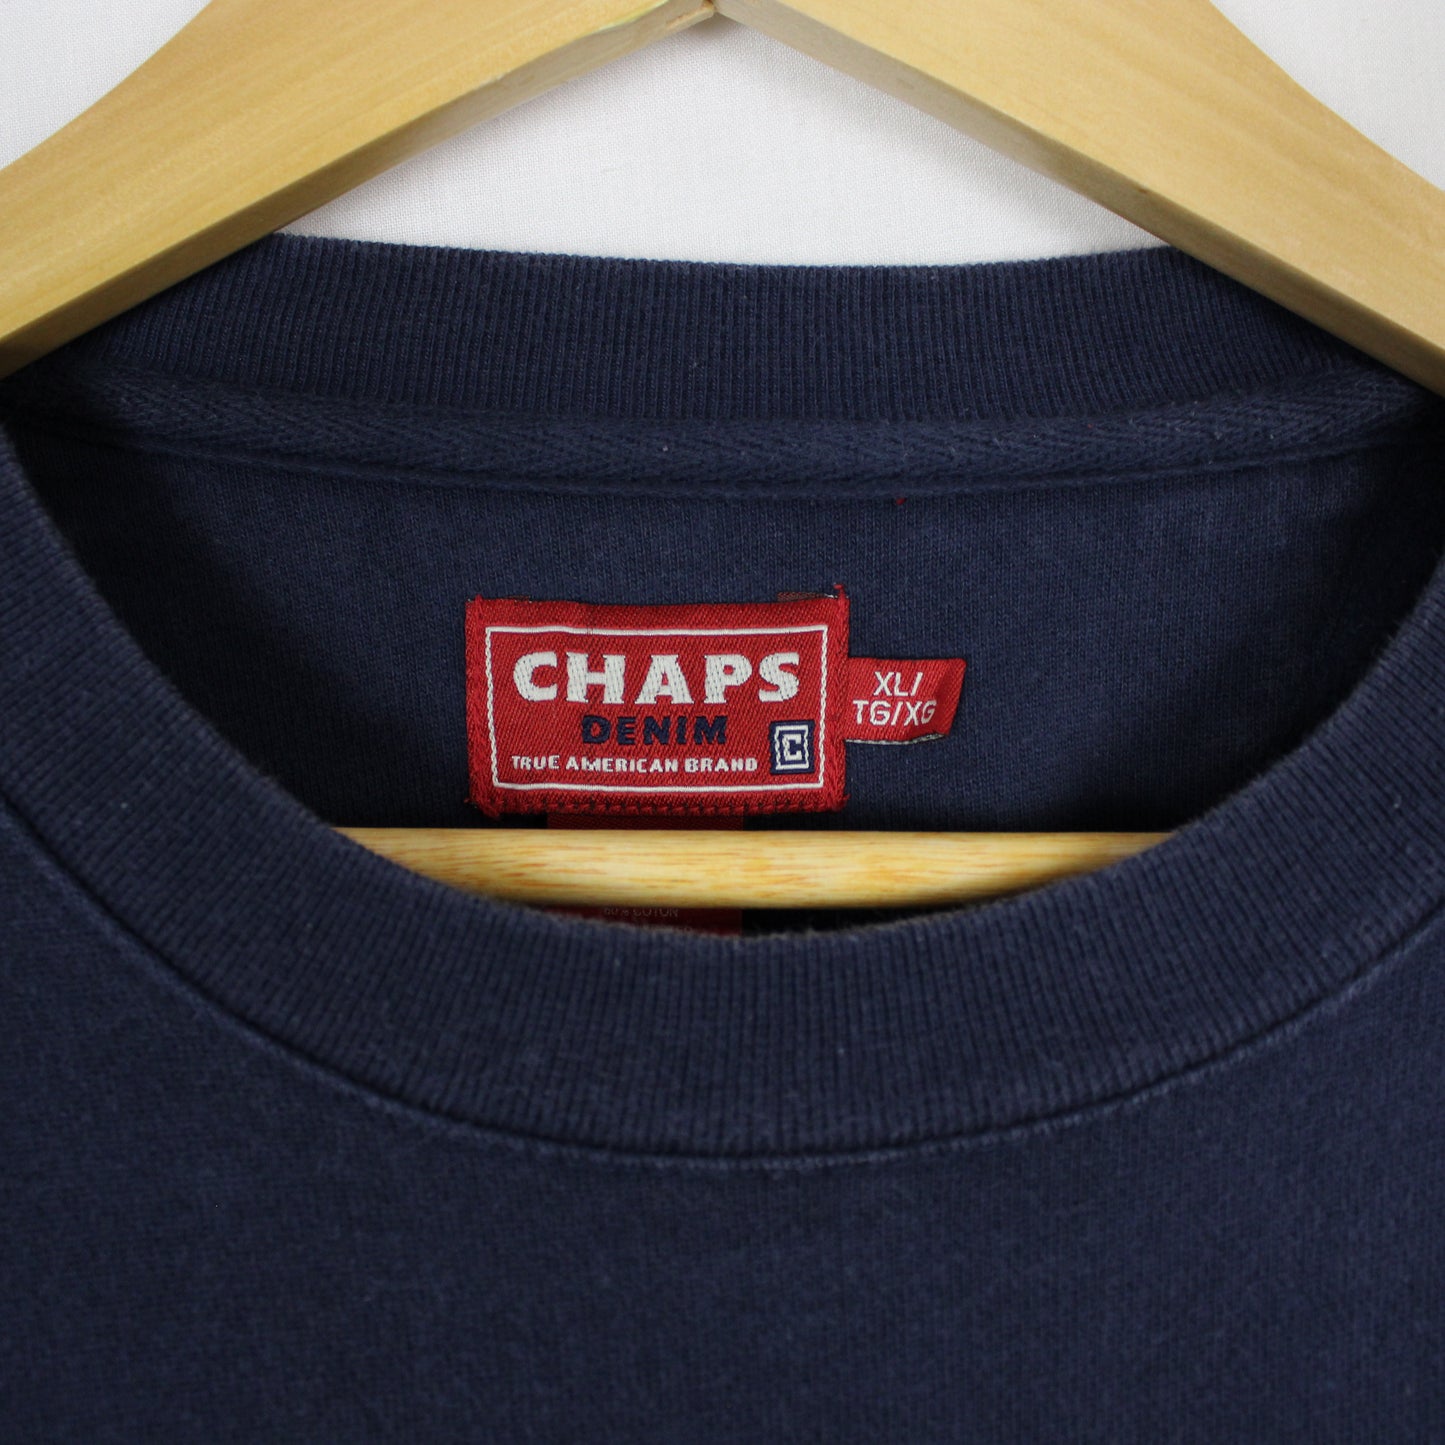 Vintage Ralph Lauren Chaps Denim Sweatshirt - XL